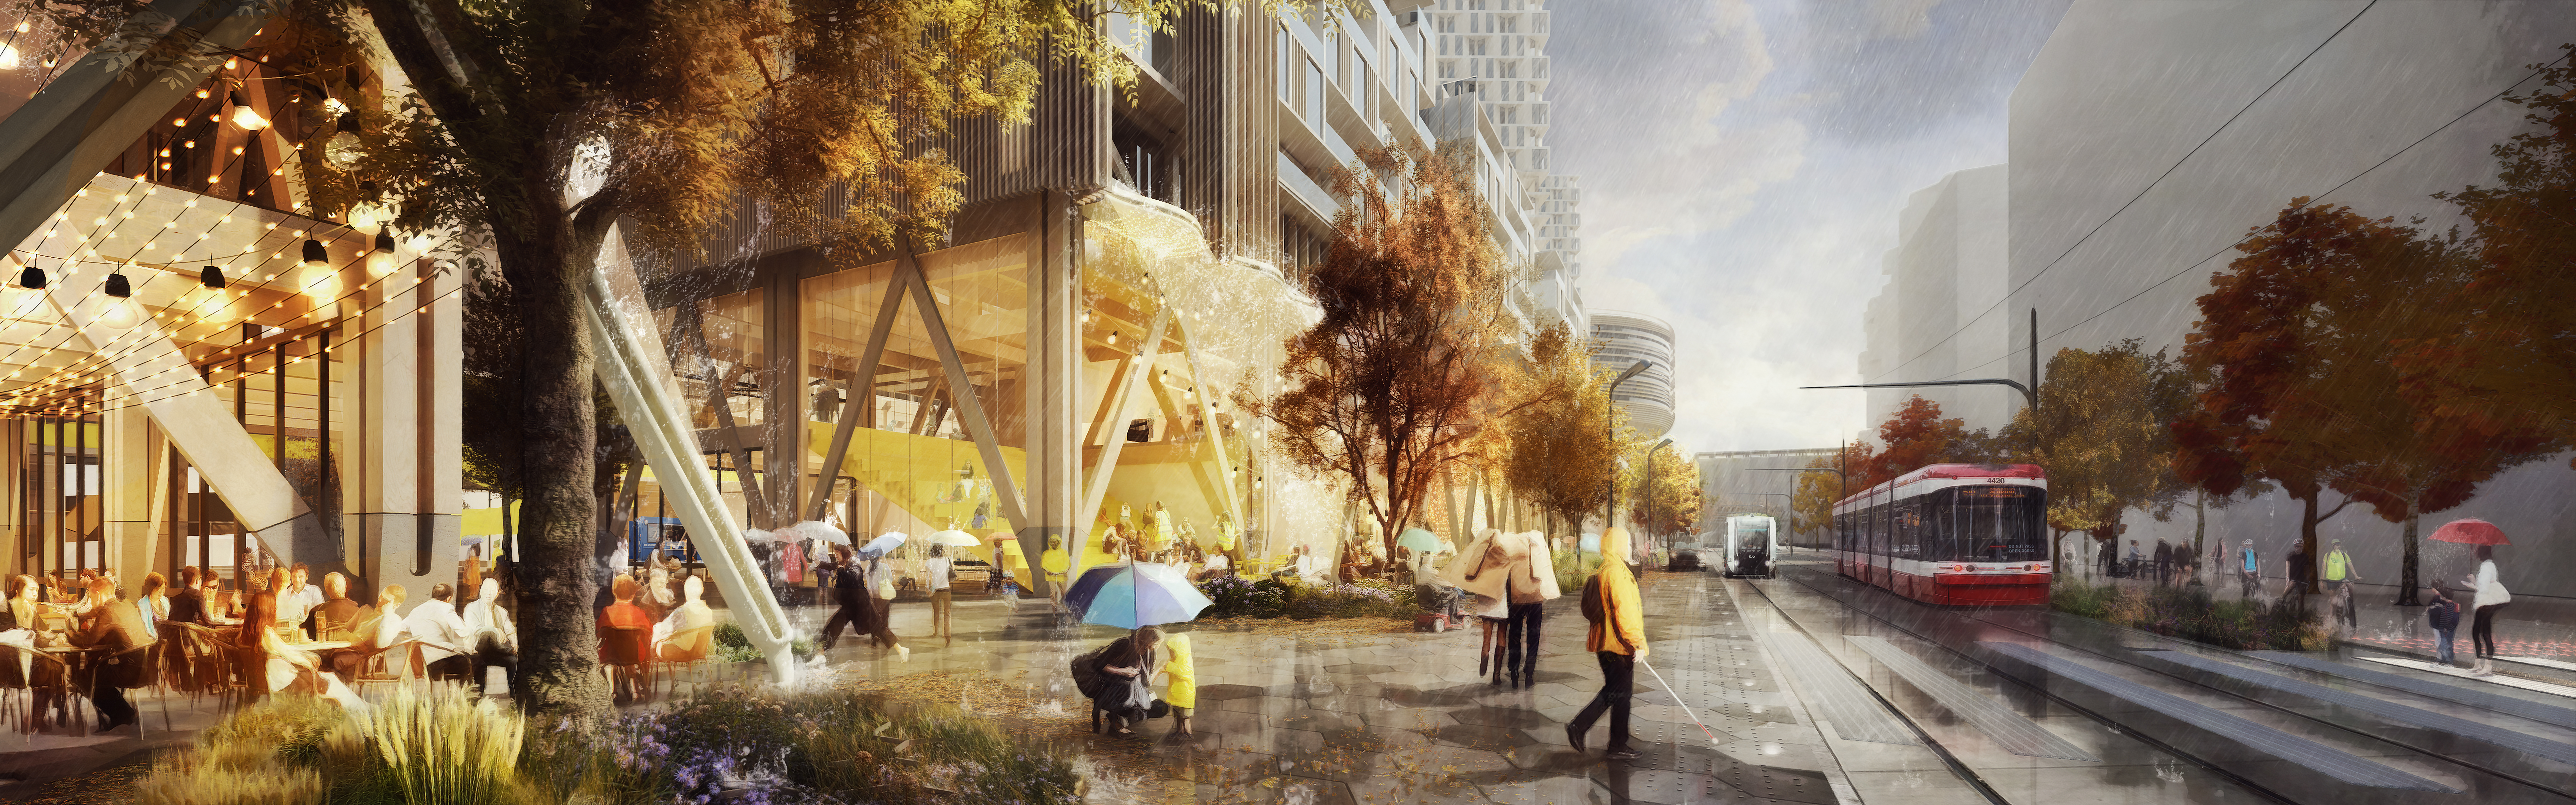 Toronto waterfront development by Sidewalk Labs